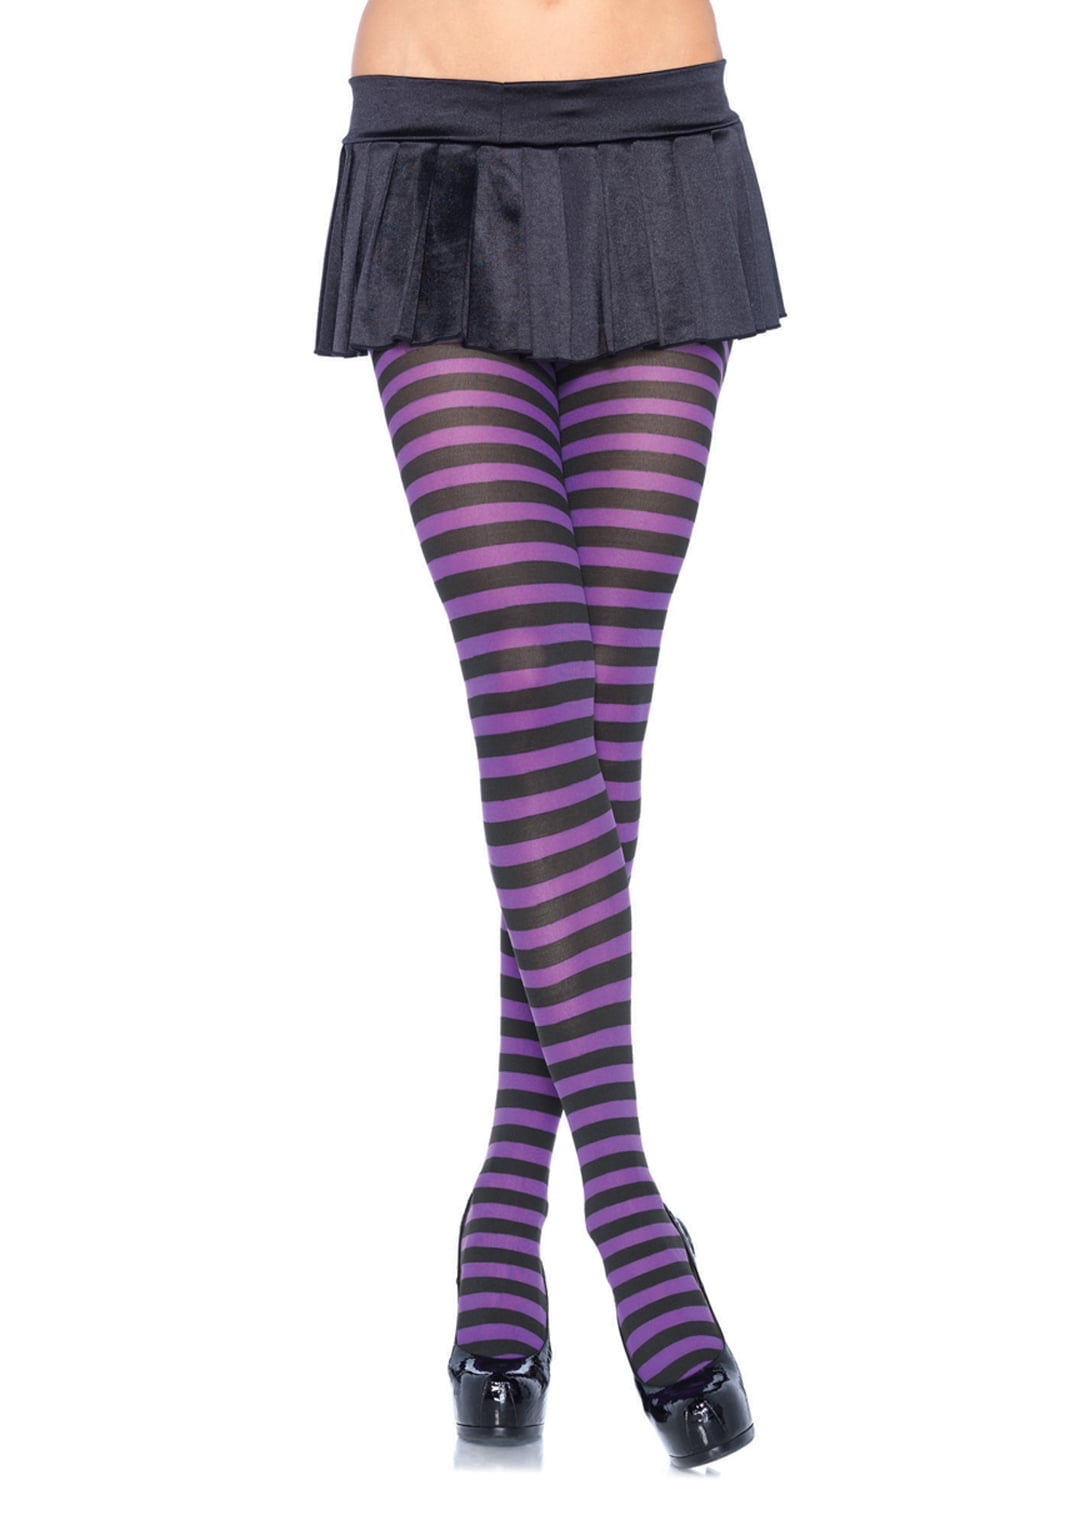 Black And Purple Striped Tights Halloween Leg Avenue Adult Plus 1X/2X New